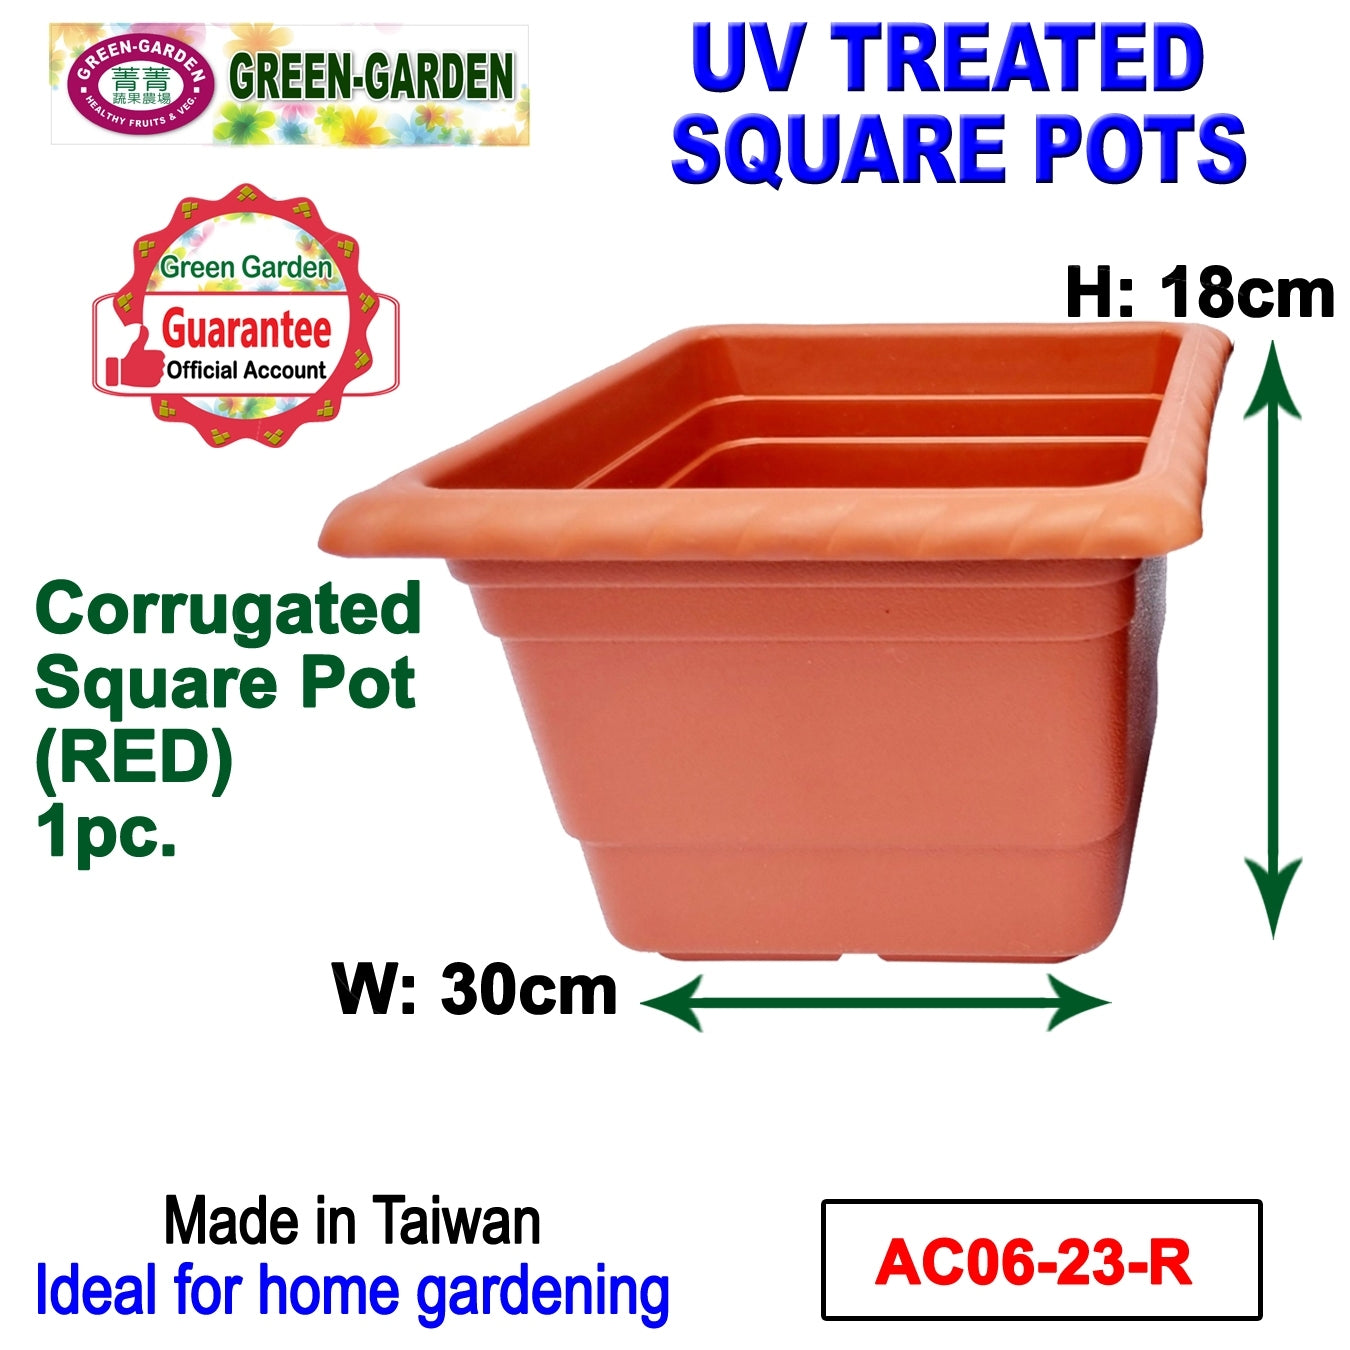 UV TREATED Corrugated Square Pot Size: 30x30x18cm